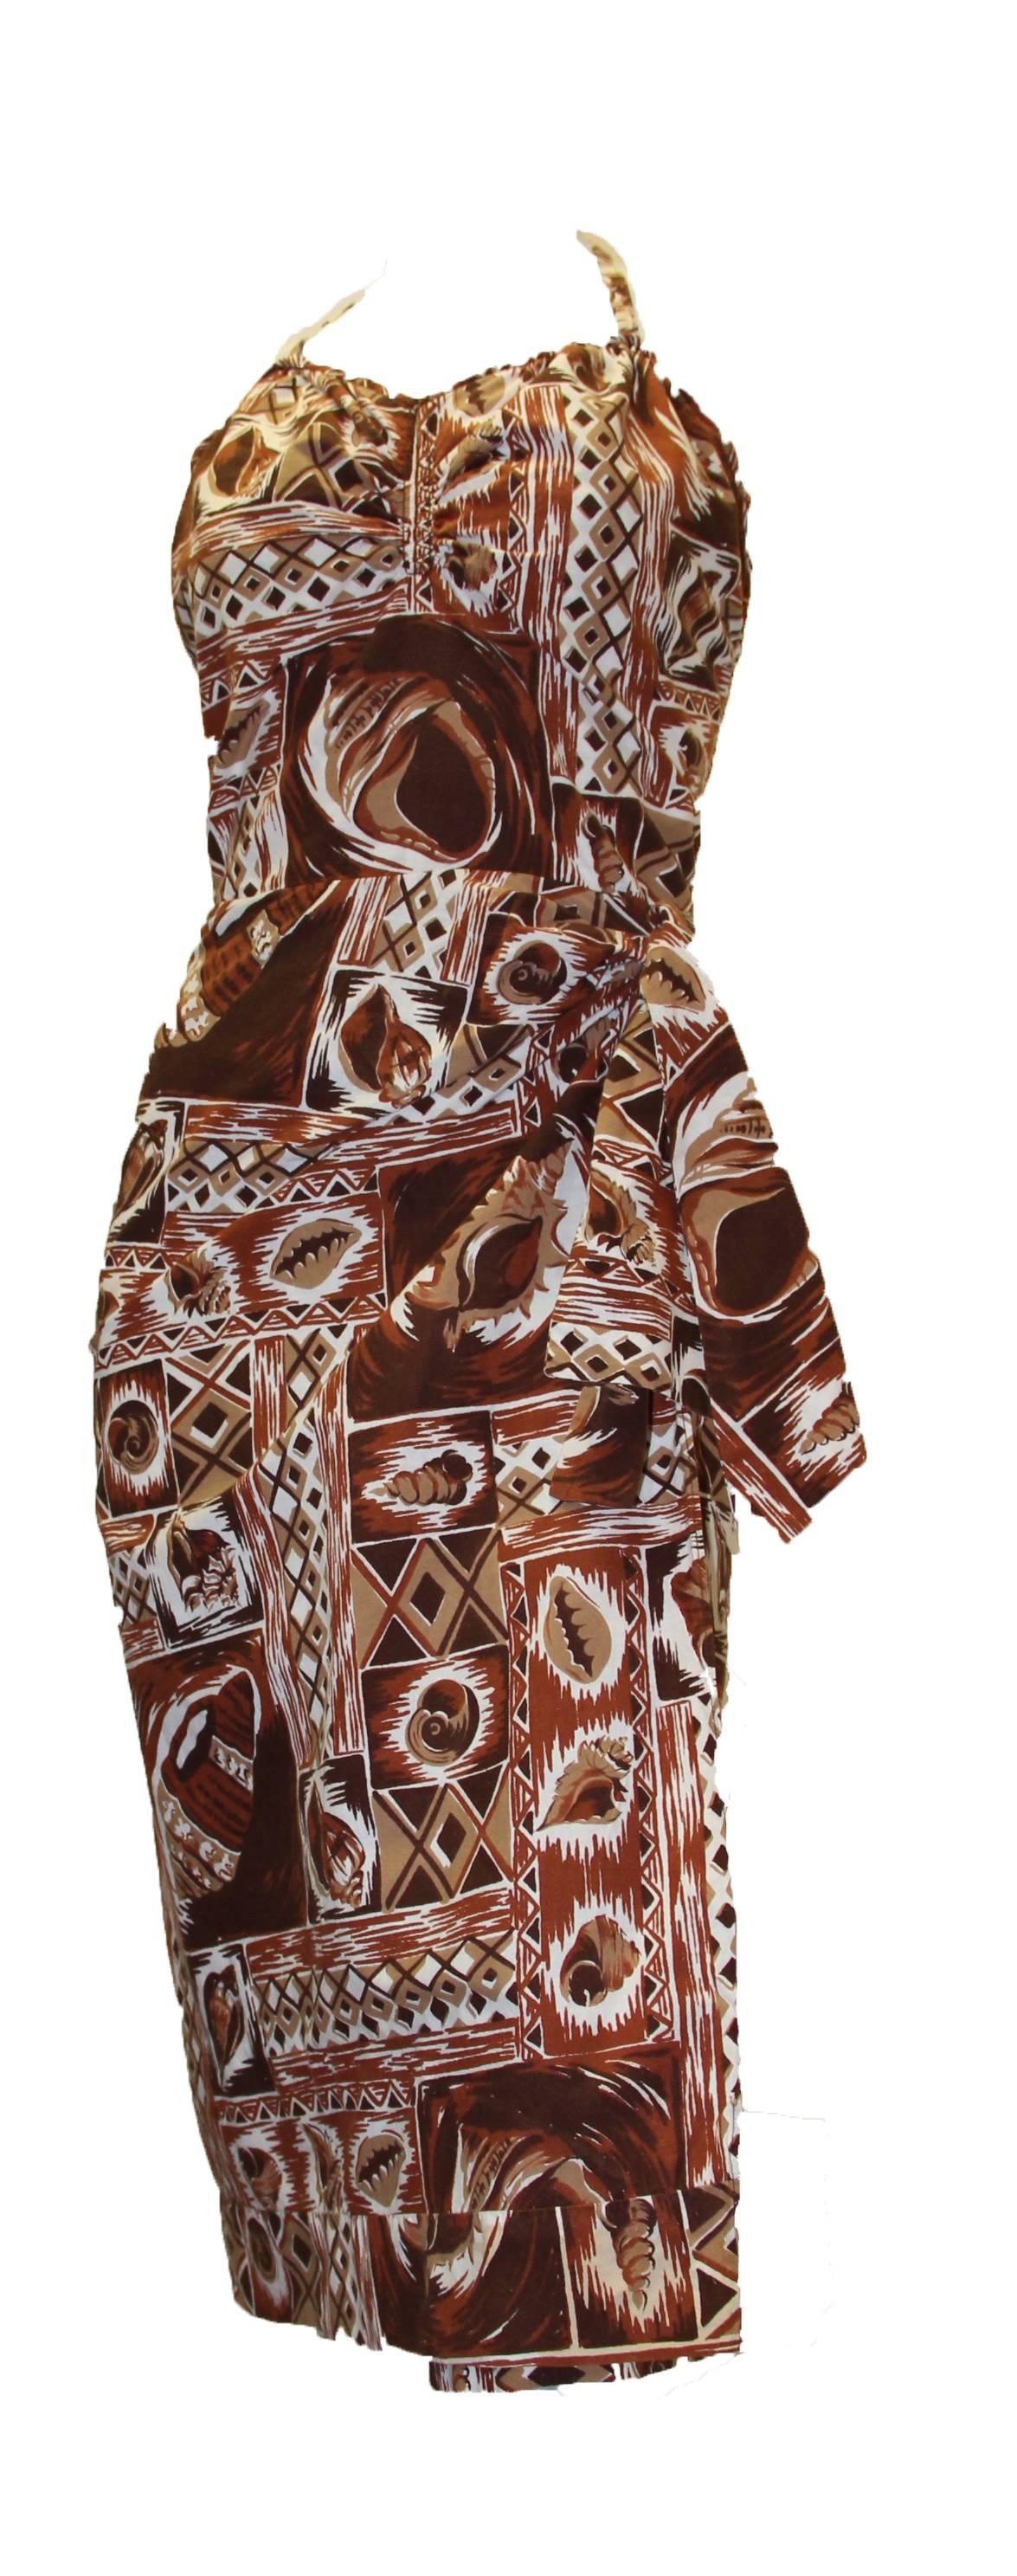 1950s Hawaiian shell print dress with wrap waist detail. Convertible halter strap. Side zip closure. Ruched sweetheart neckline. 

Measurements:
Waist: 32